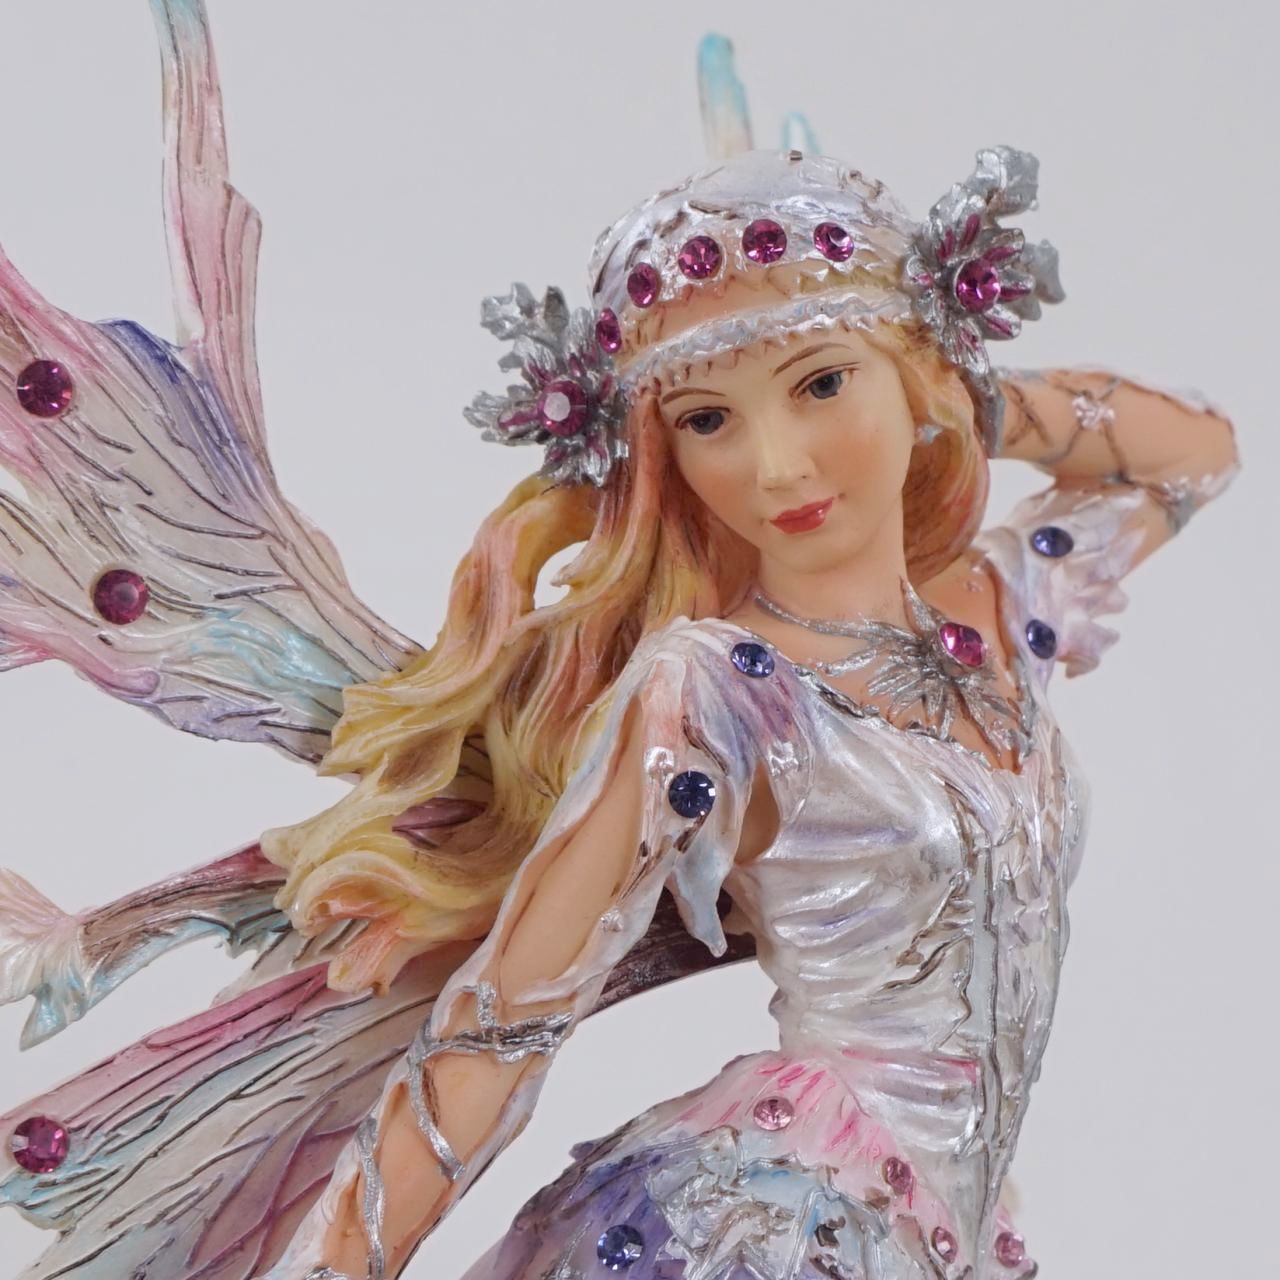 Crisalis Collection★ Ice Princess Faerie (1-5327) Standard